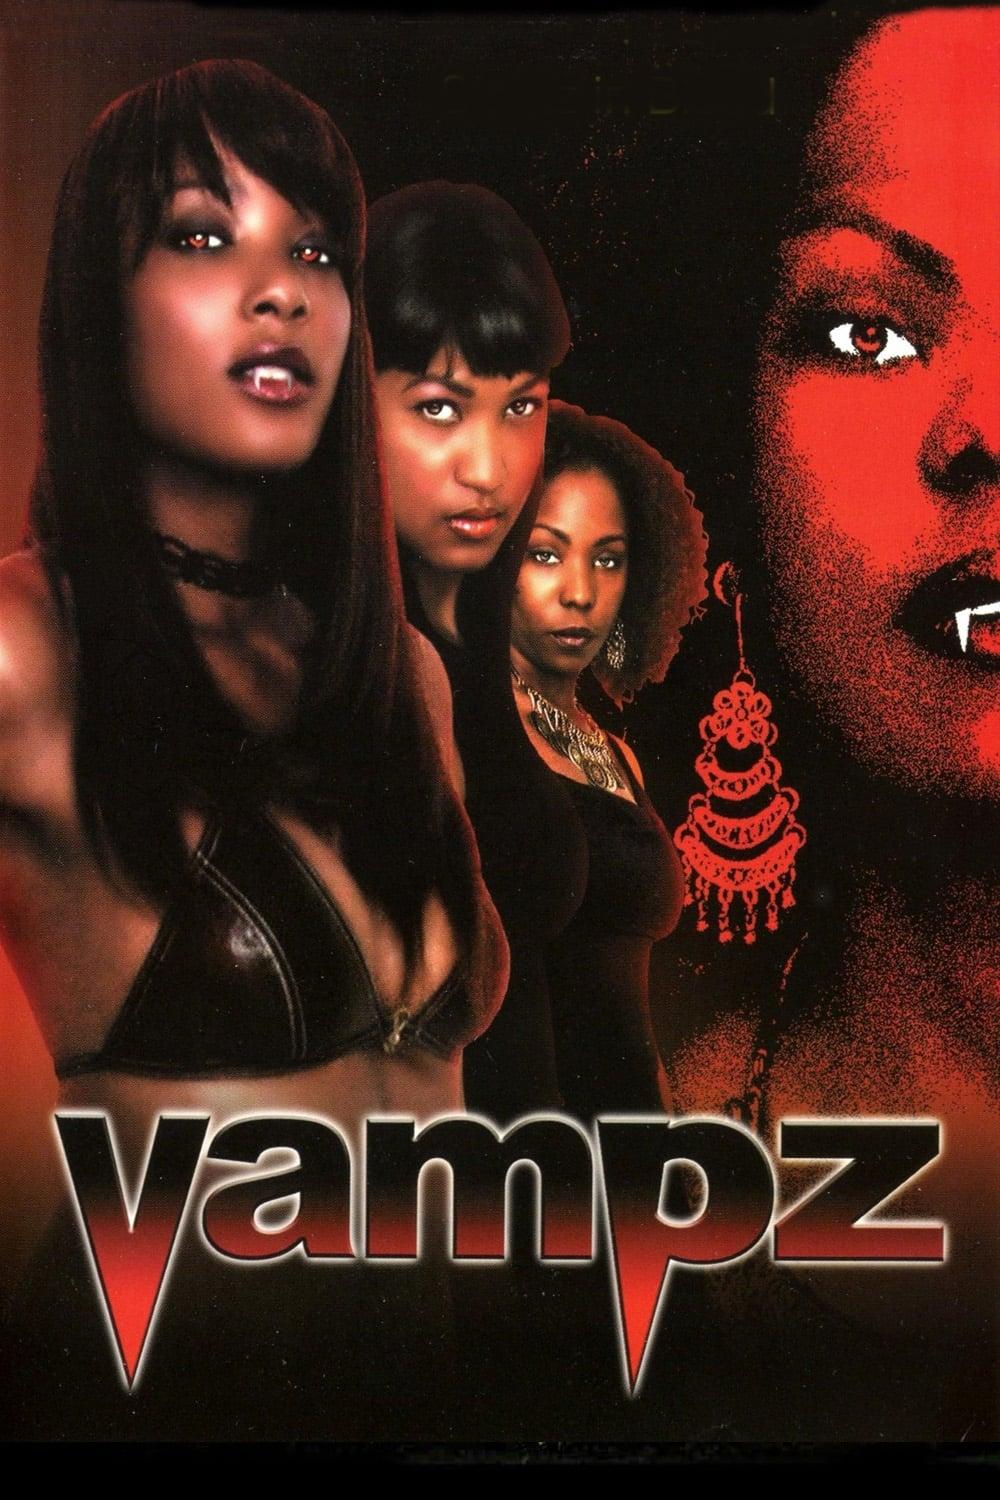 Vampz poster